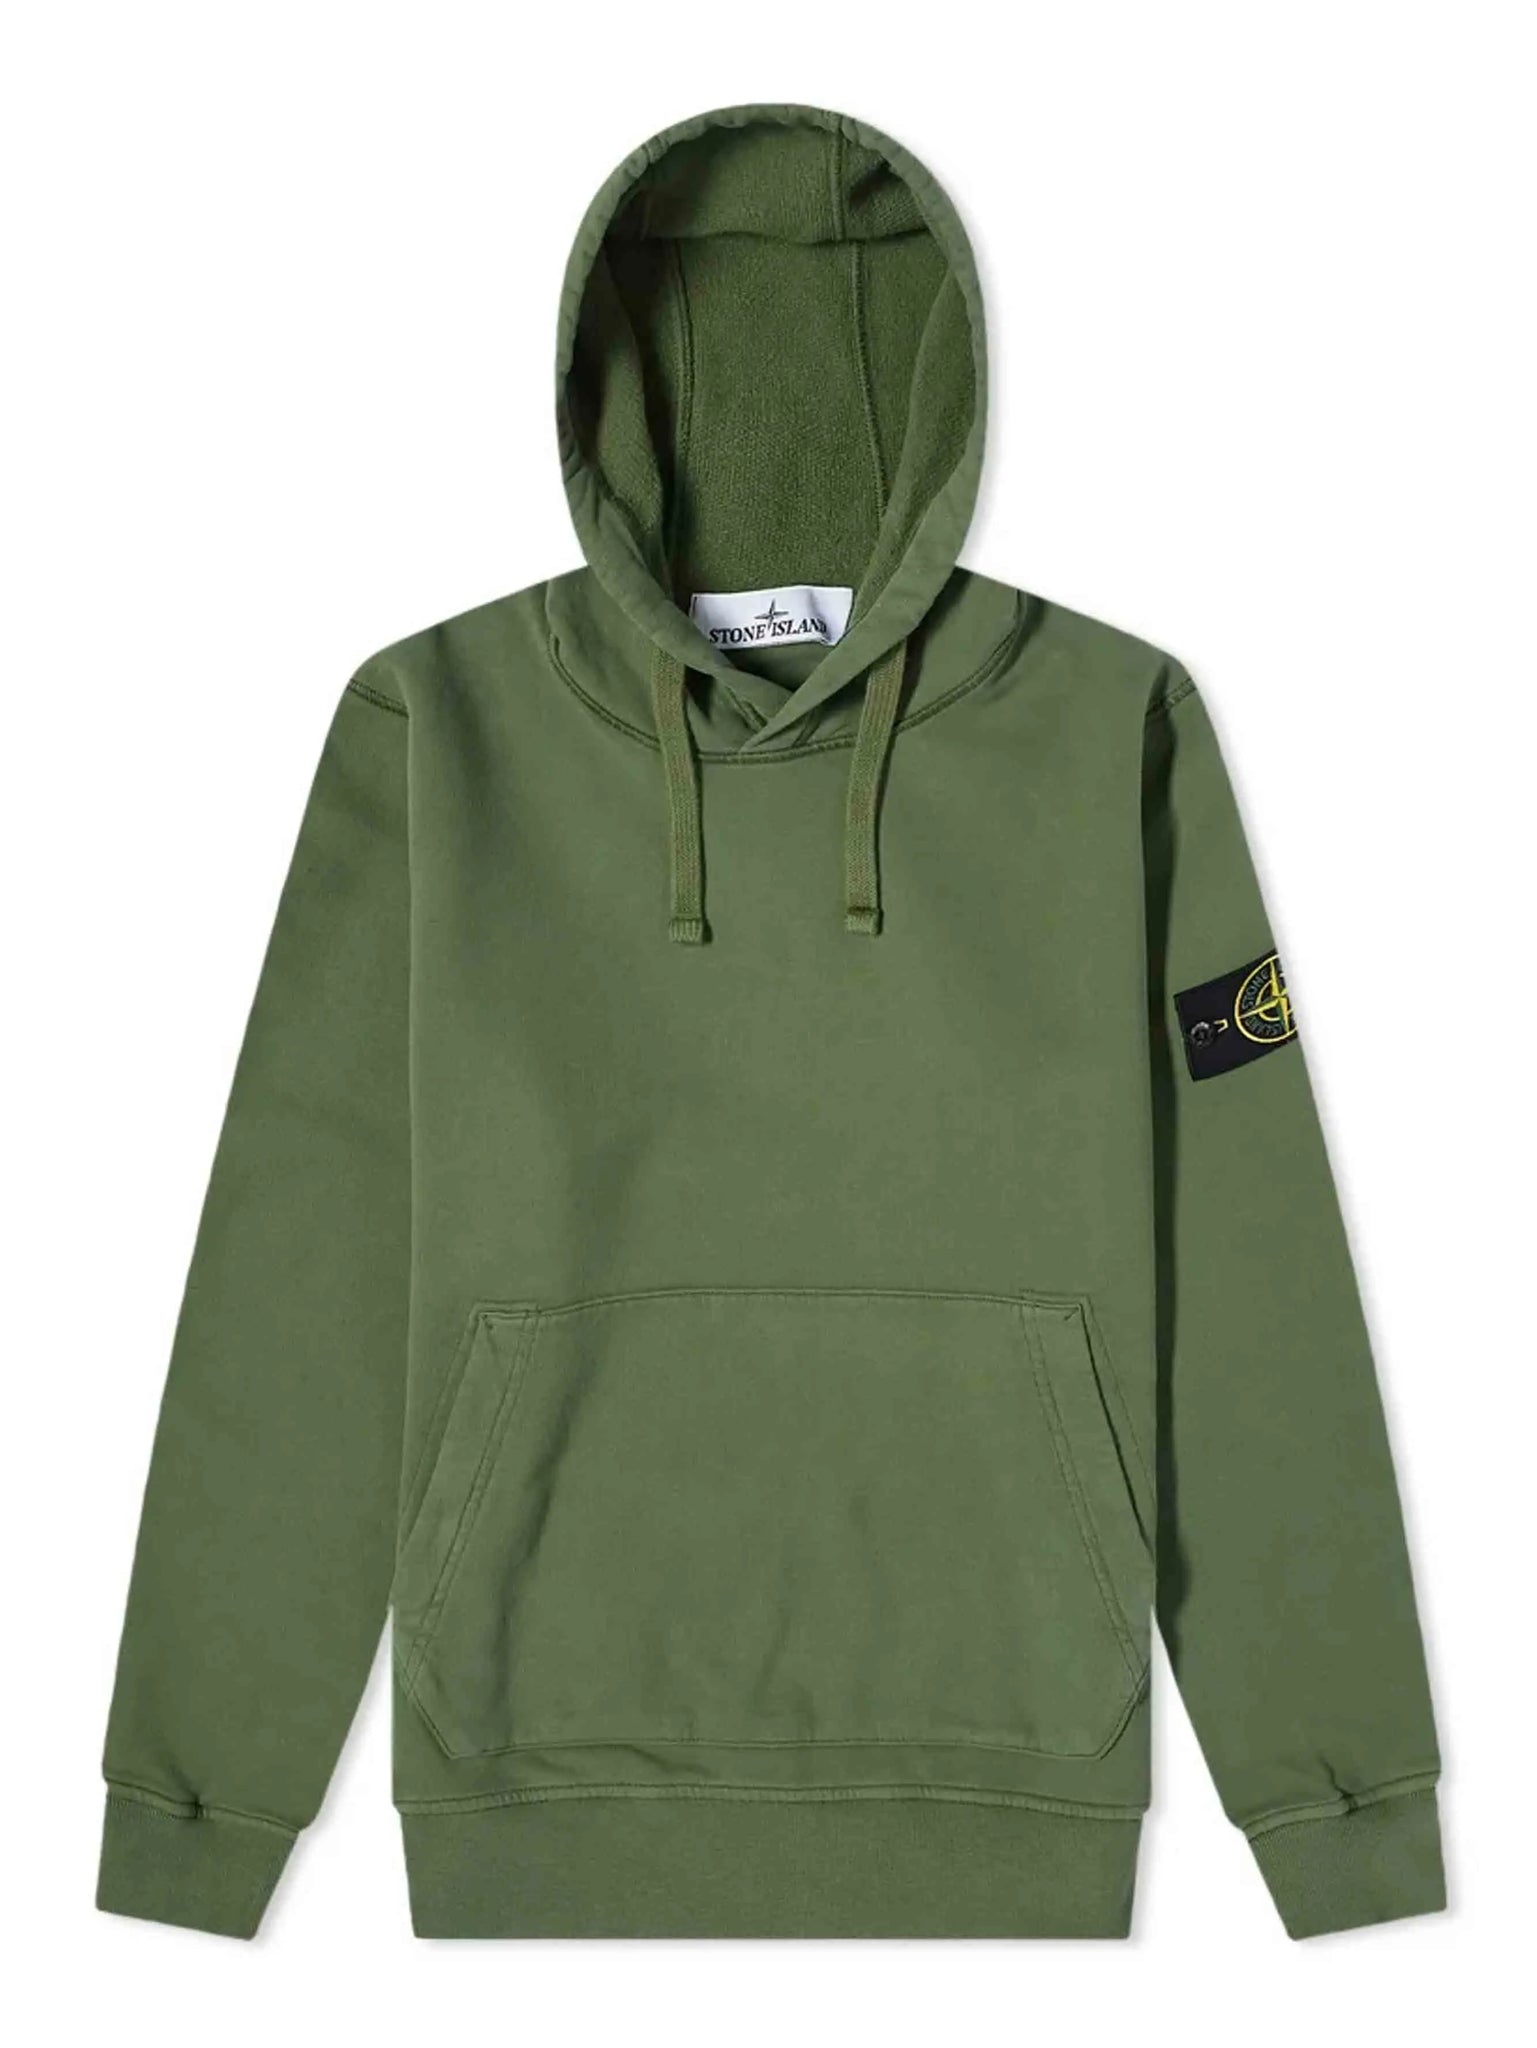 Stone Island Garment-Dyed Hooded Sweatshirt Olive Green Prior